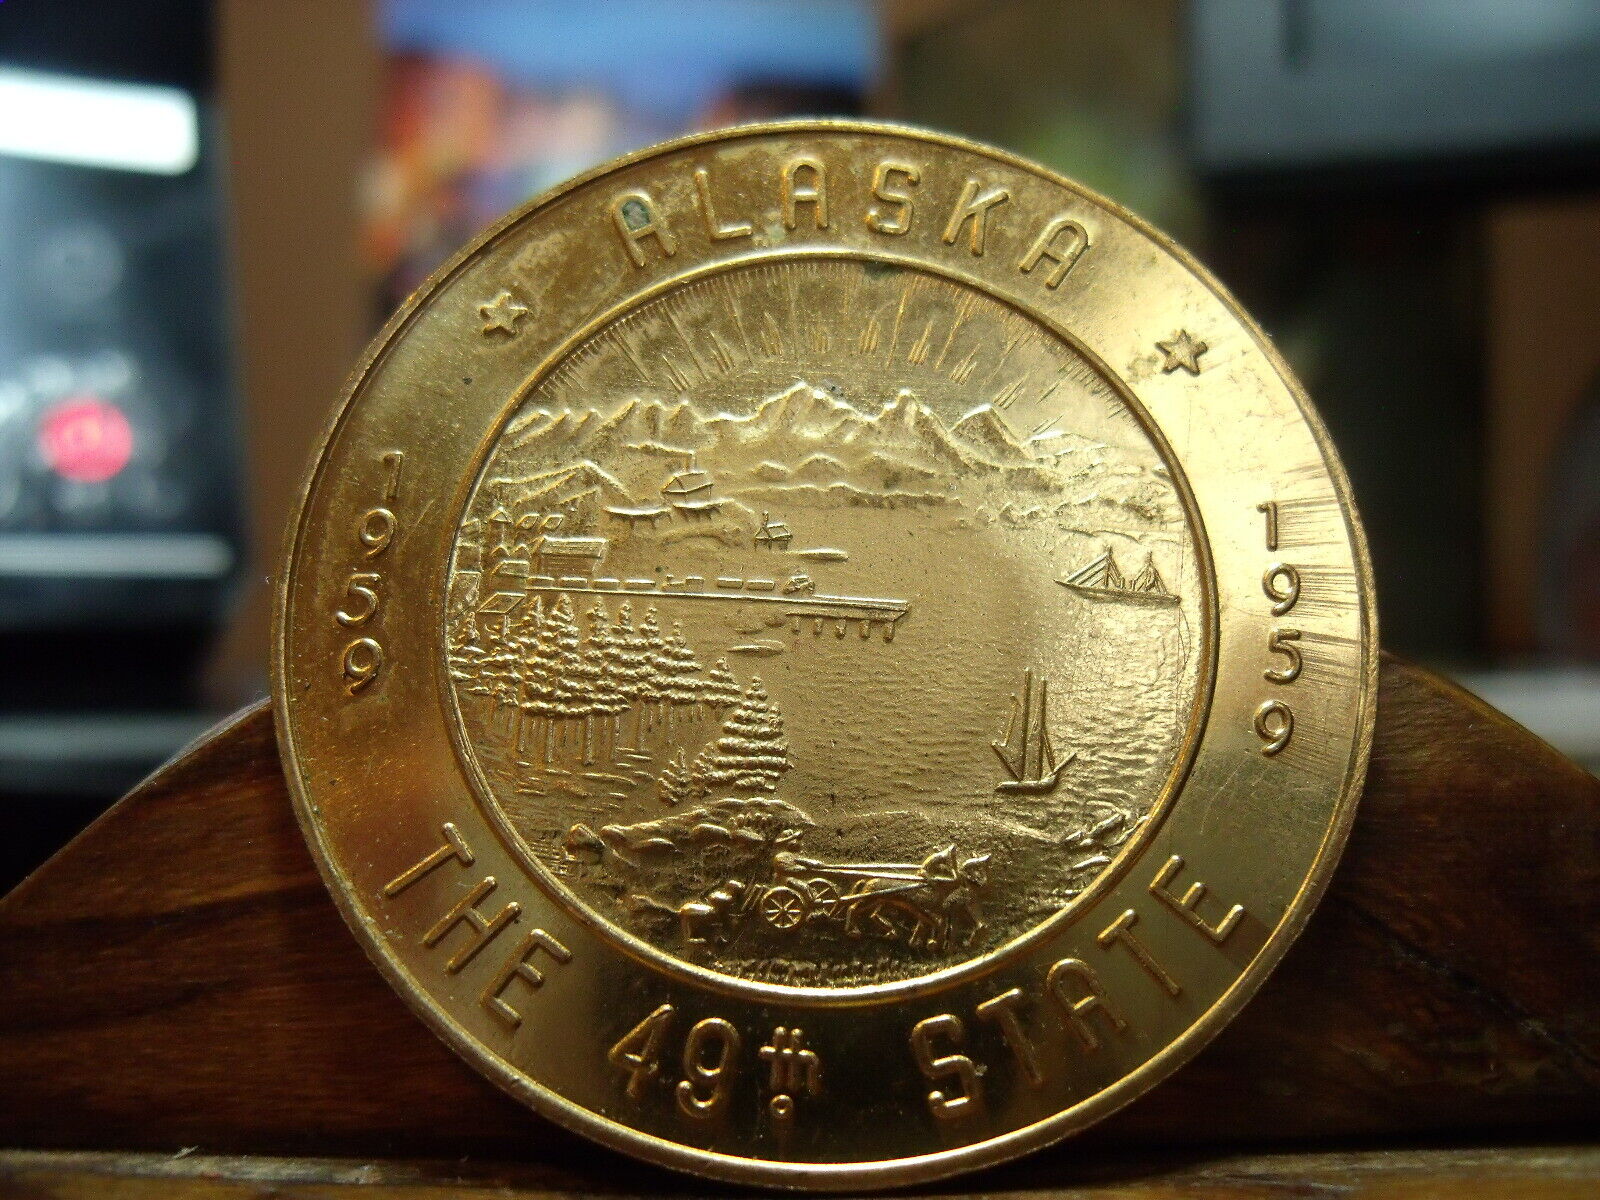 ALASKA FAIRBANKS 1959 49TH STATE $1.00 IN TRADE BIRTHDAY YEAR SOUVENIR MONEY